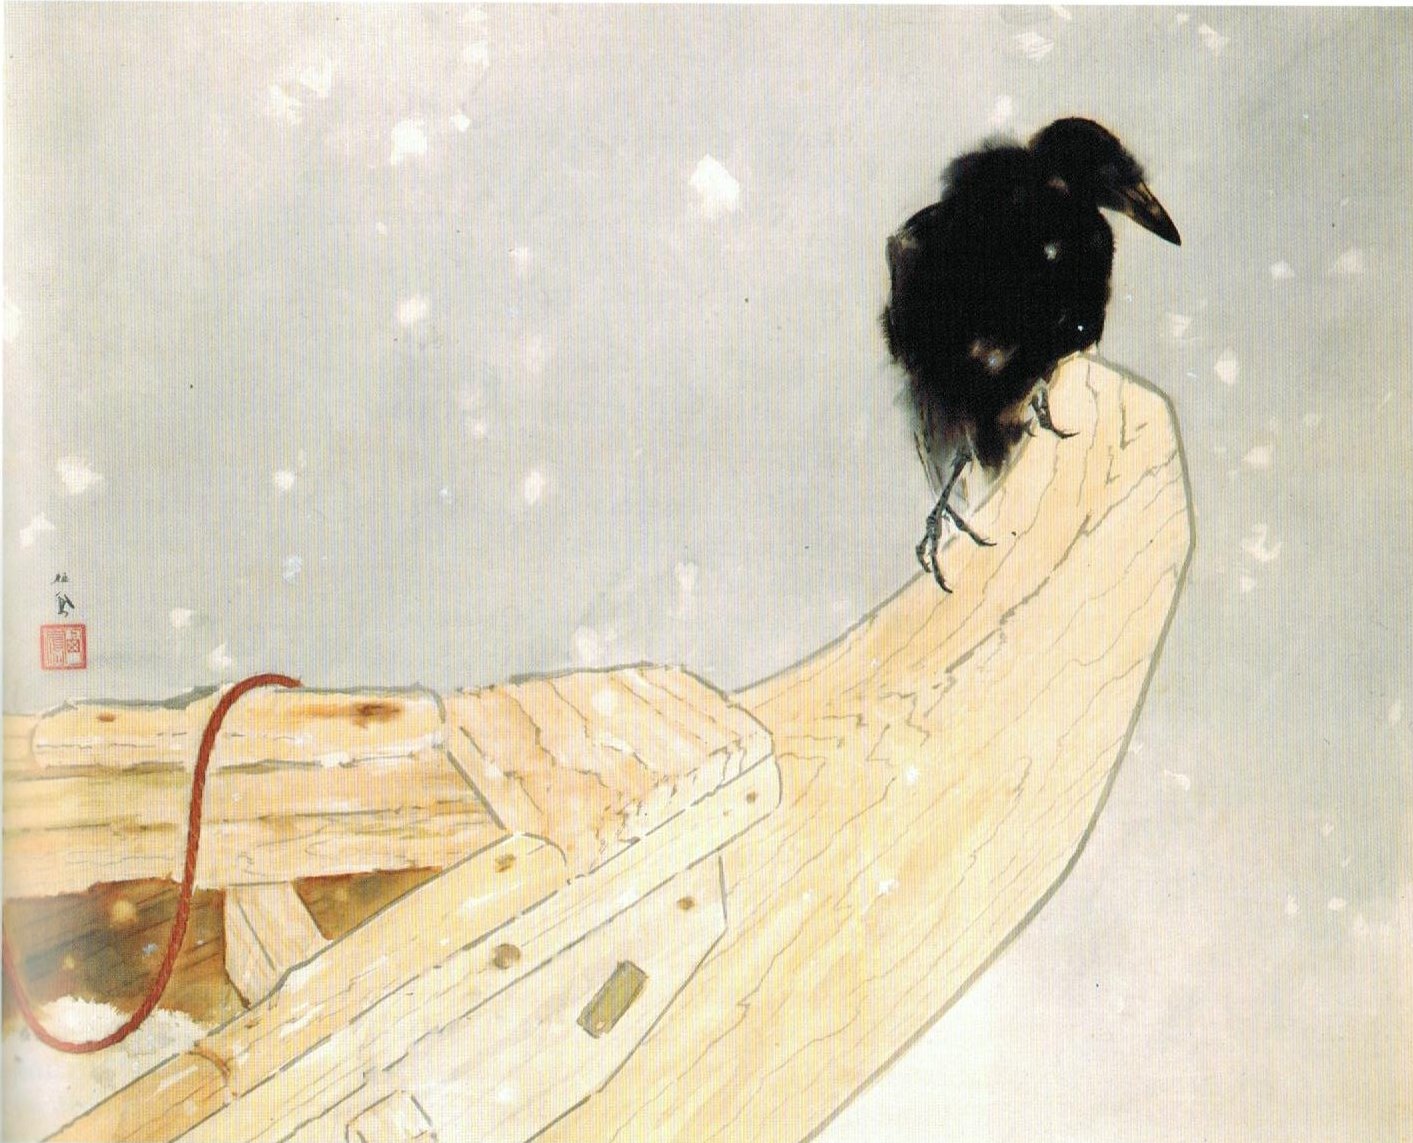 Tavaszi hó (Shunsetsu) by Takeuchi Seihō - 1942 - 74.3 x 90.9 cm 